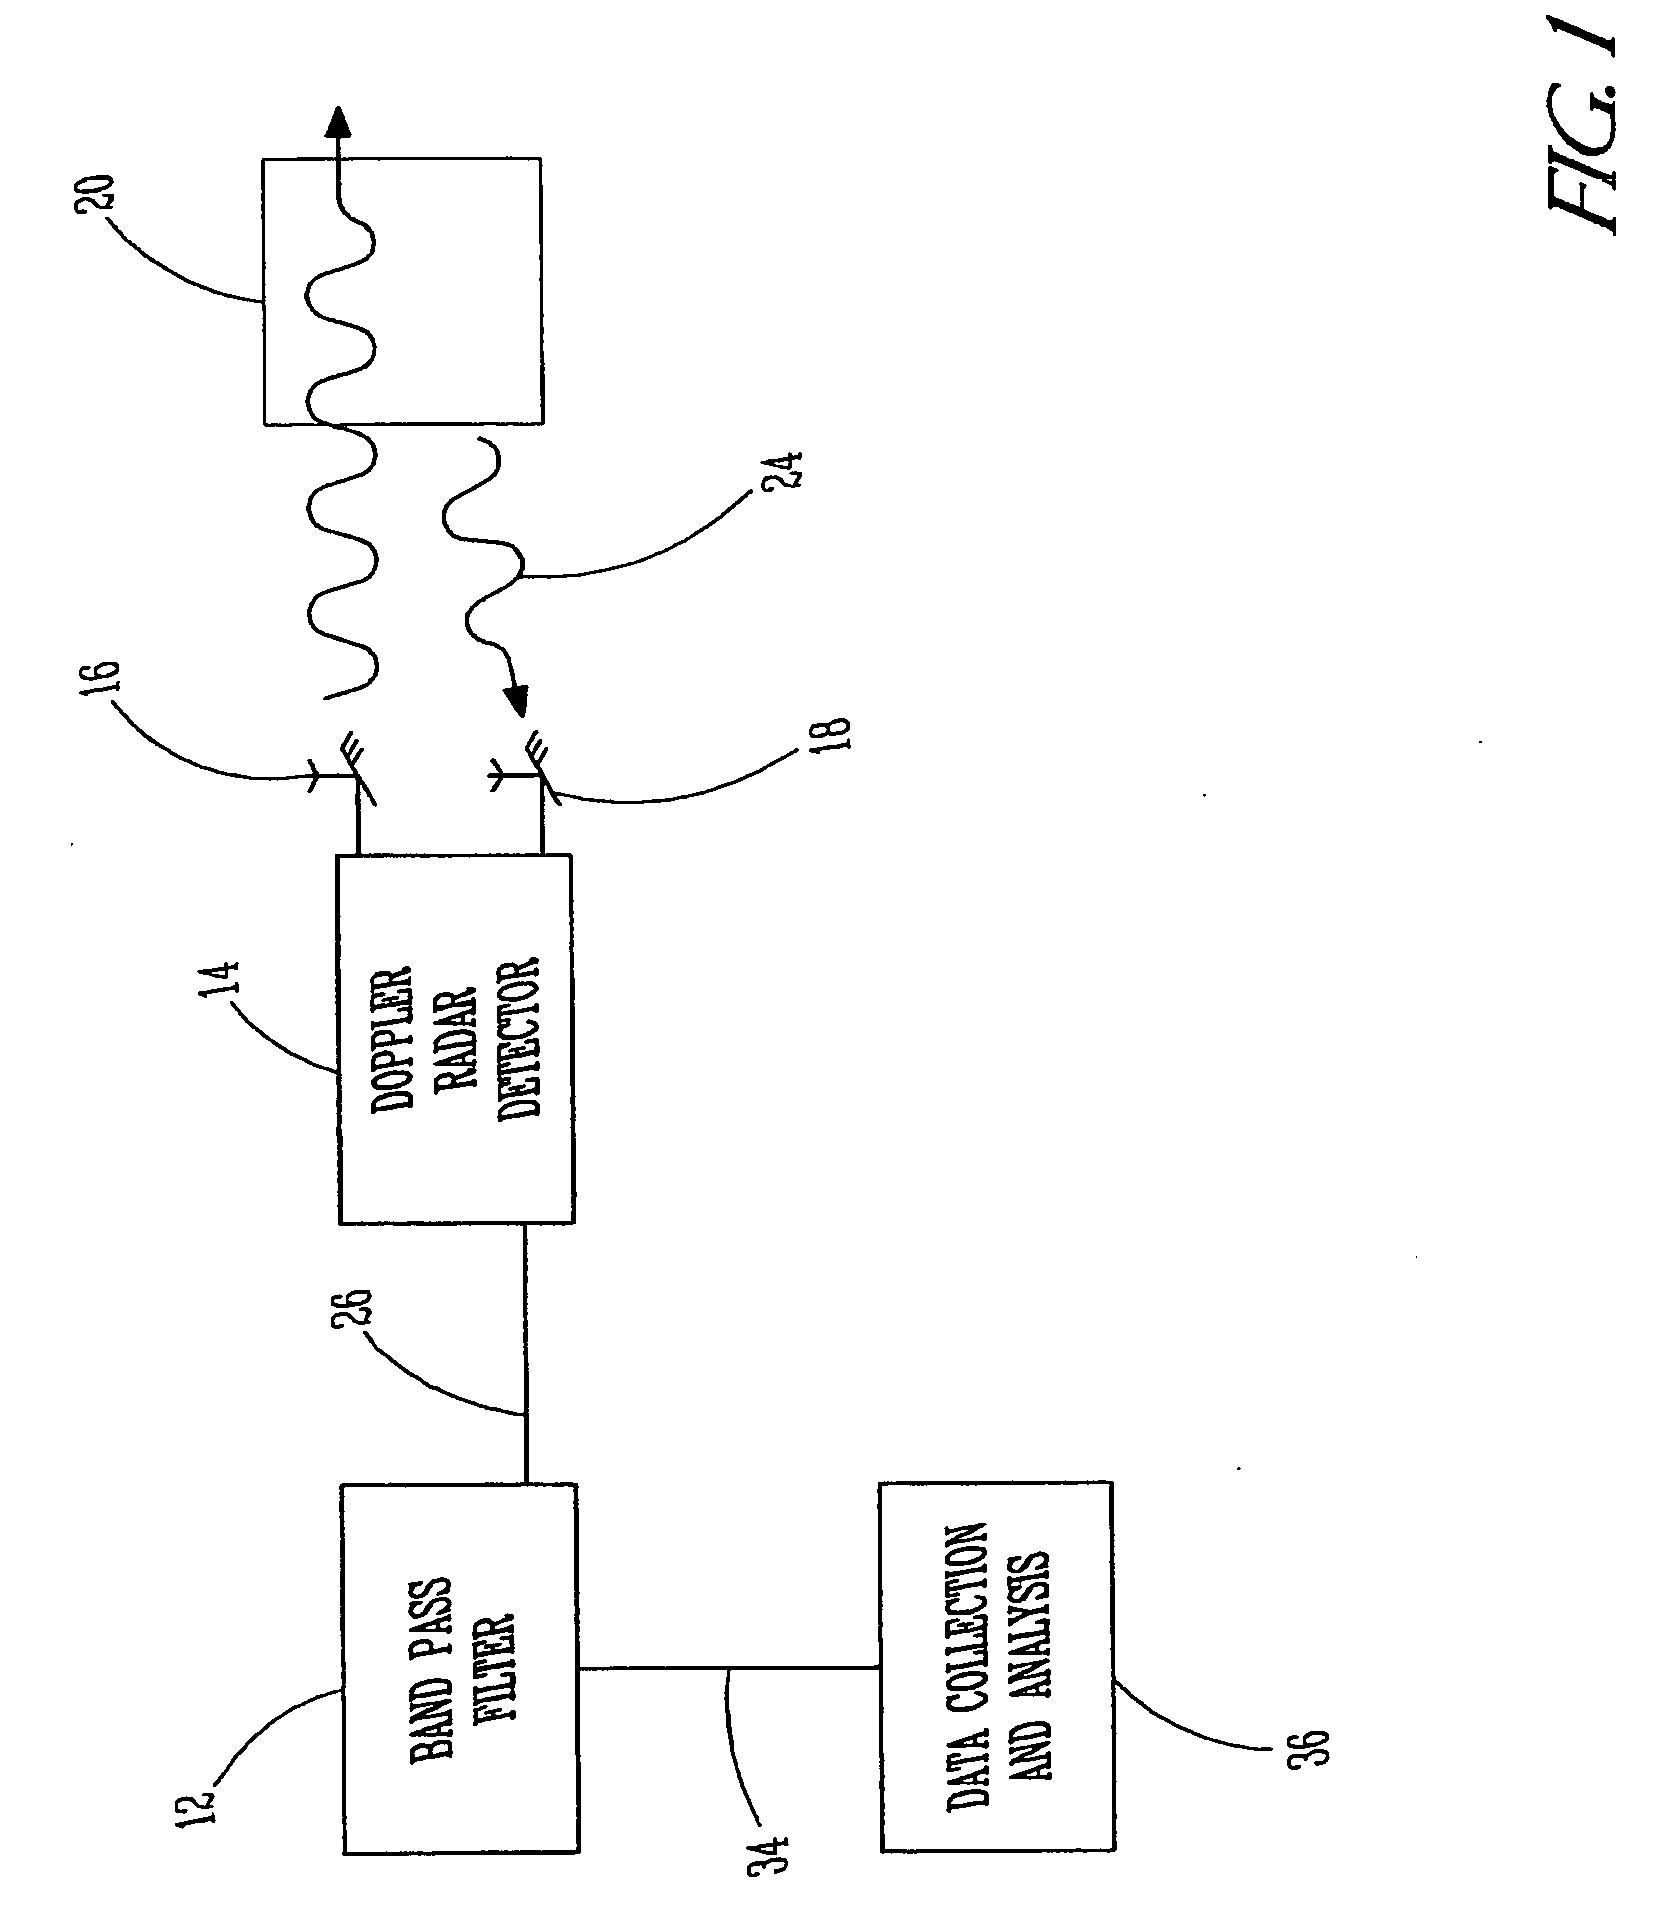 Method for detecting acoustic emission using a microwave doppler radar detector